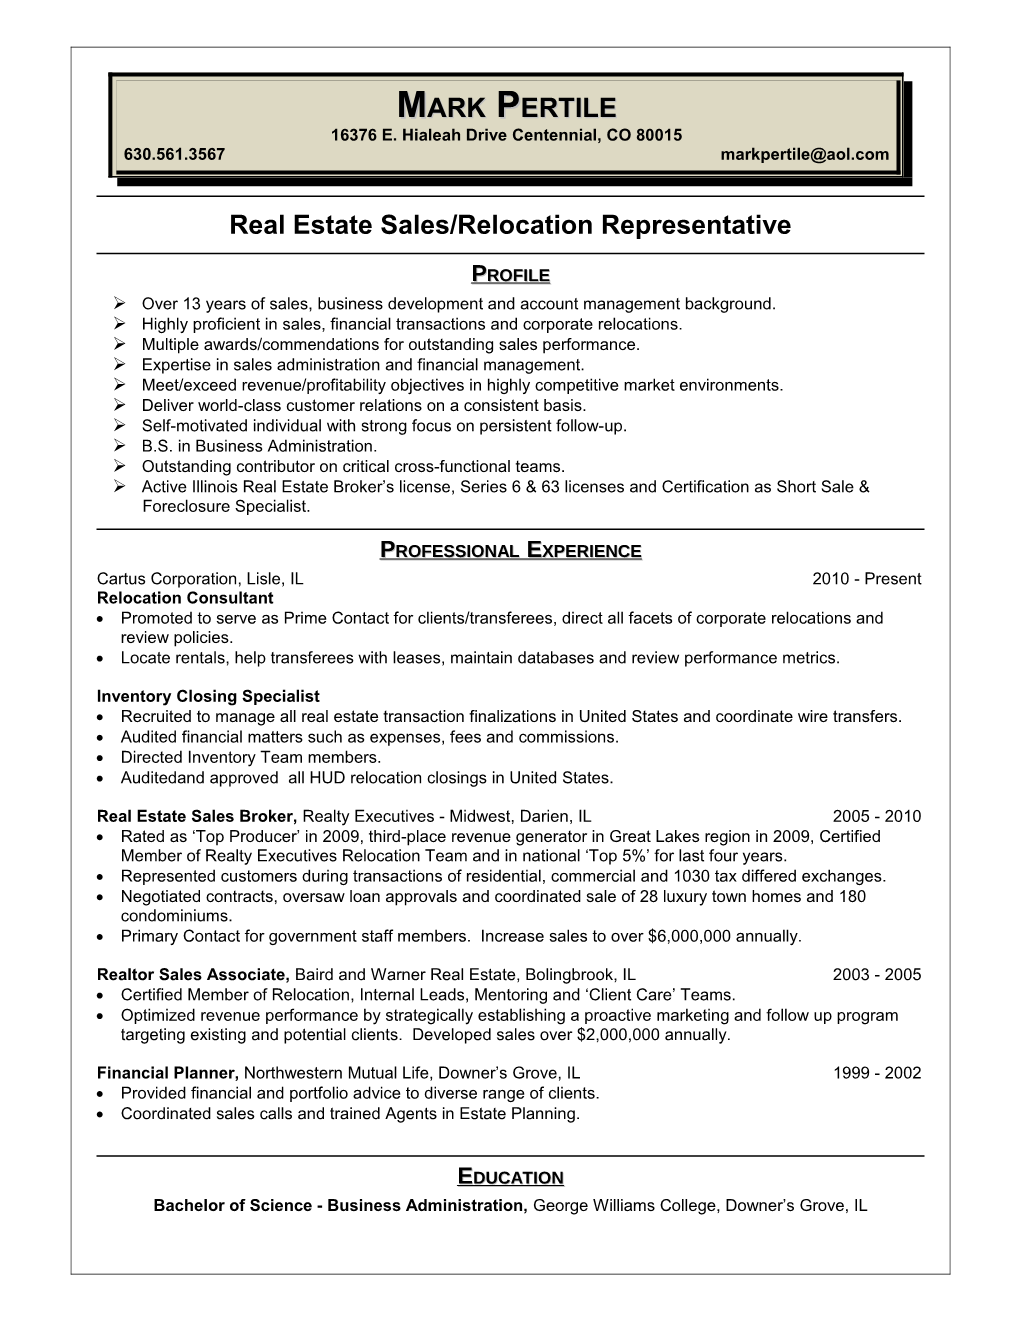 Real Estate Sales/Relocation Representative